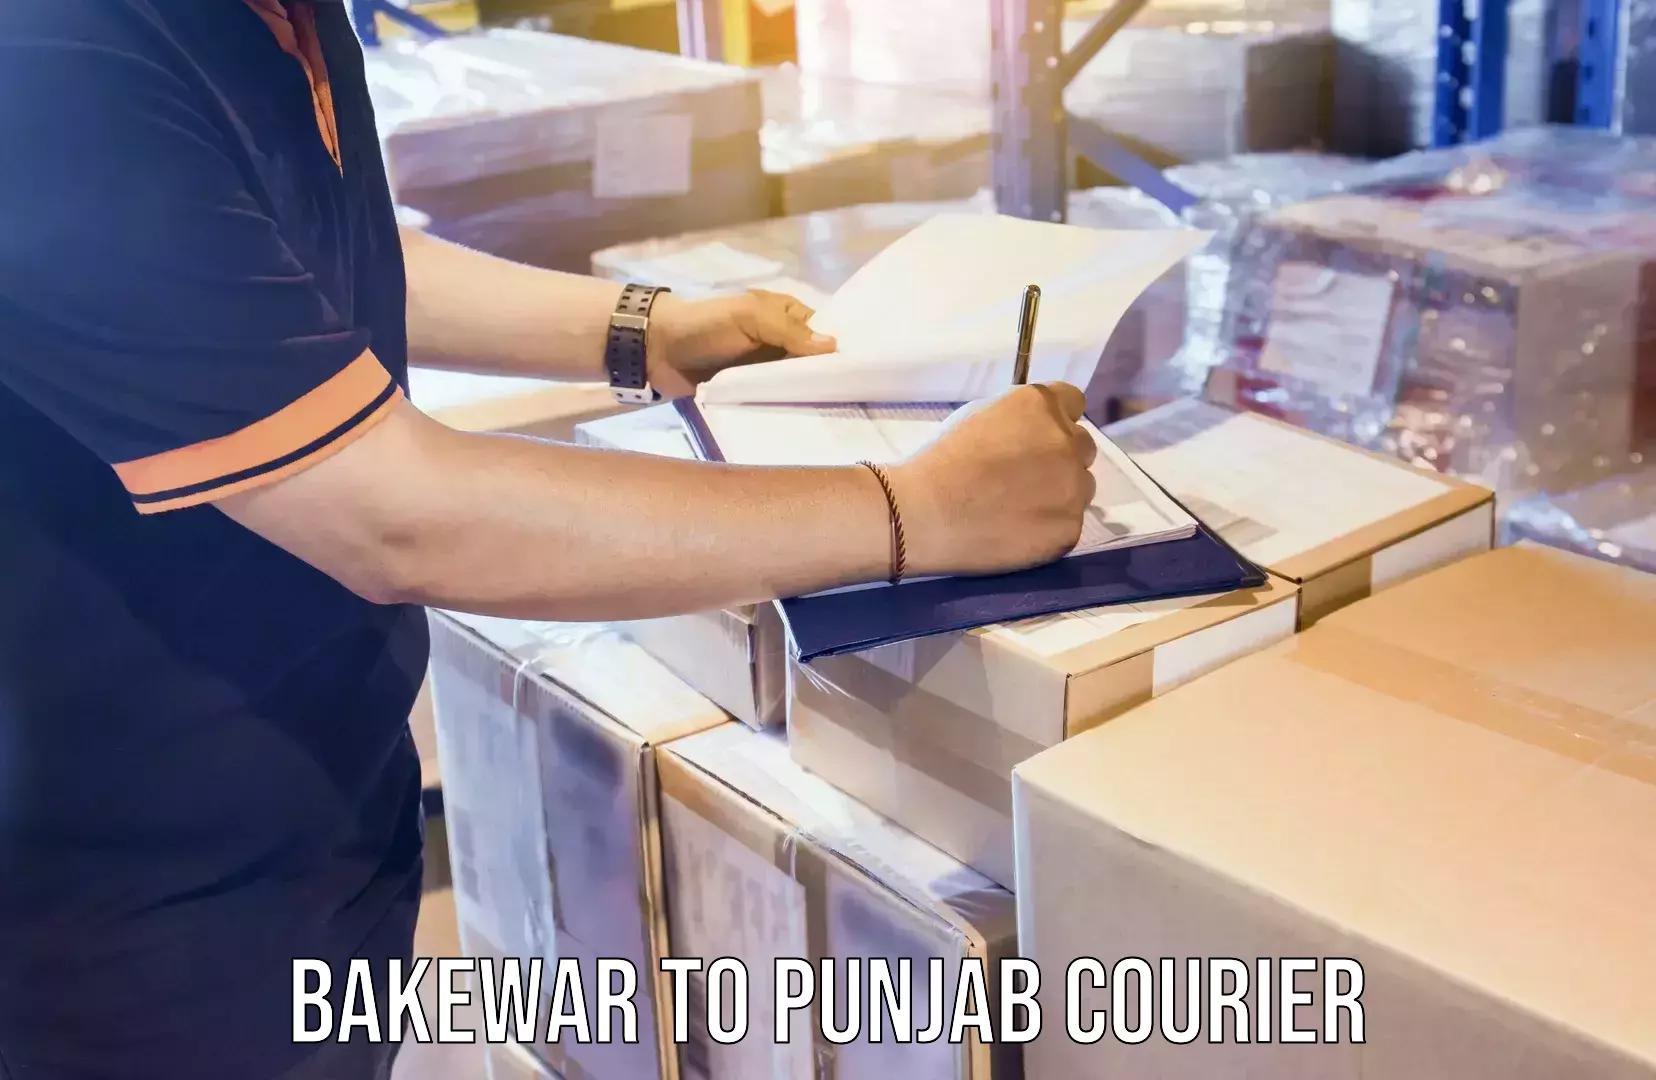 International courier networks Bakewar to Punjab